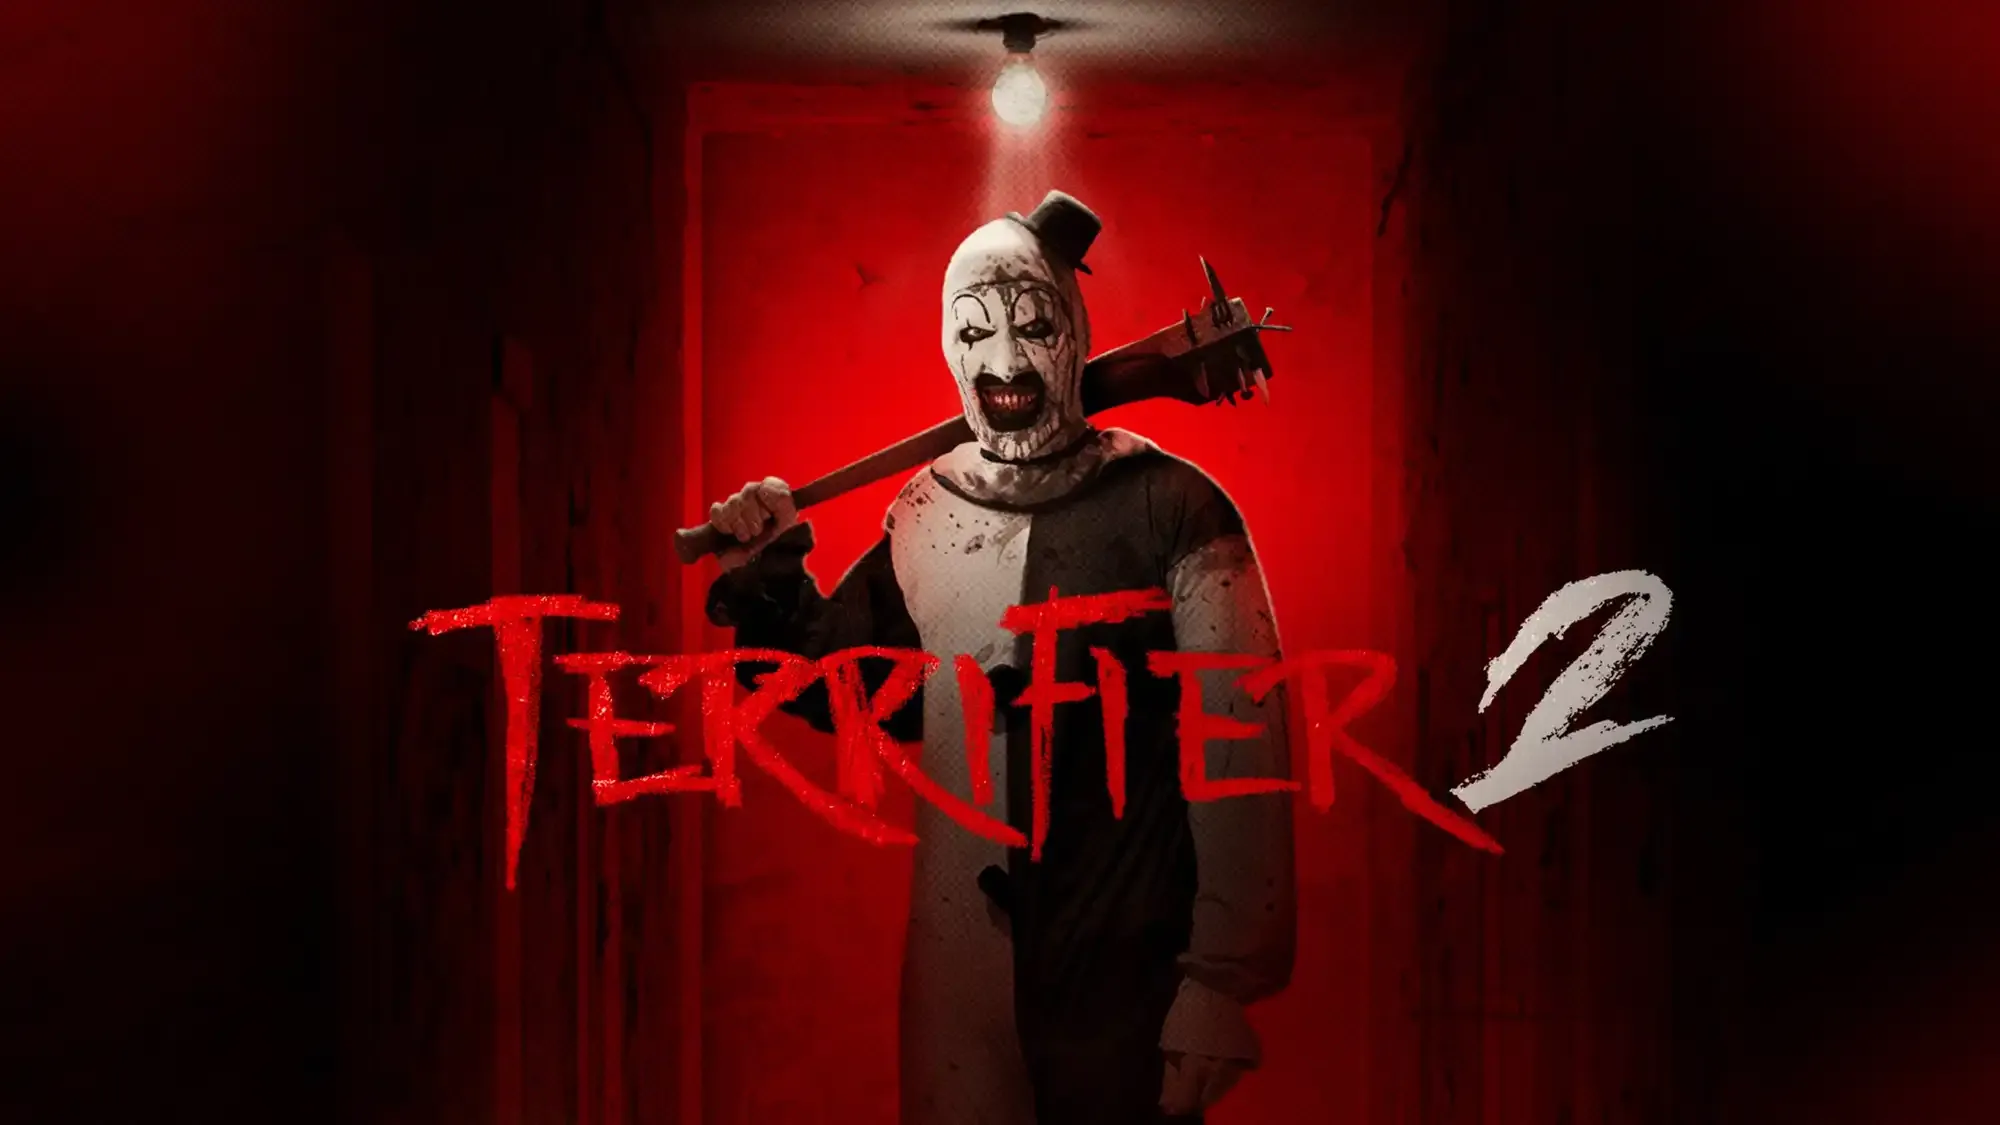 Terrifier 2 movie review